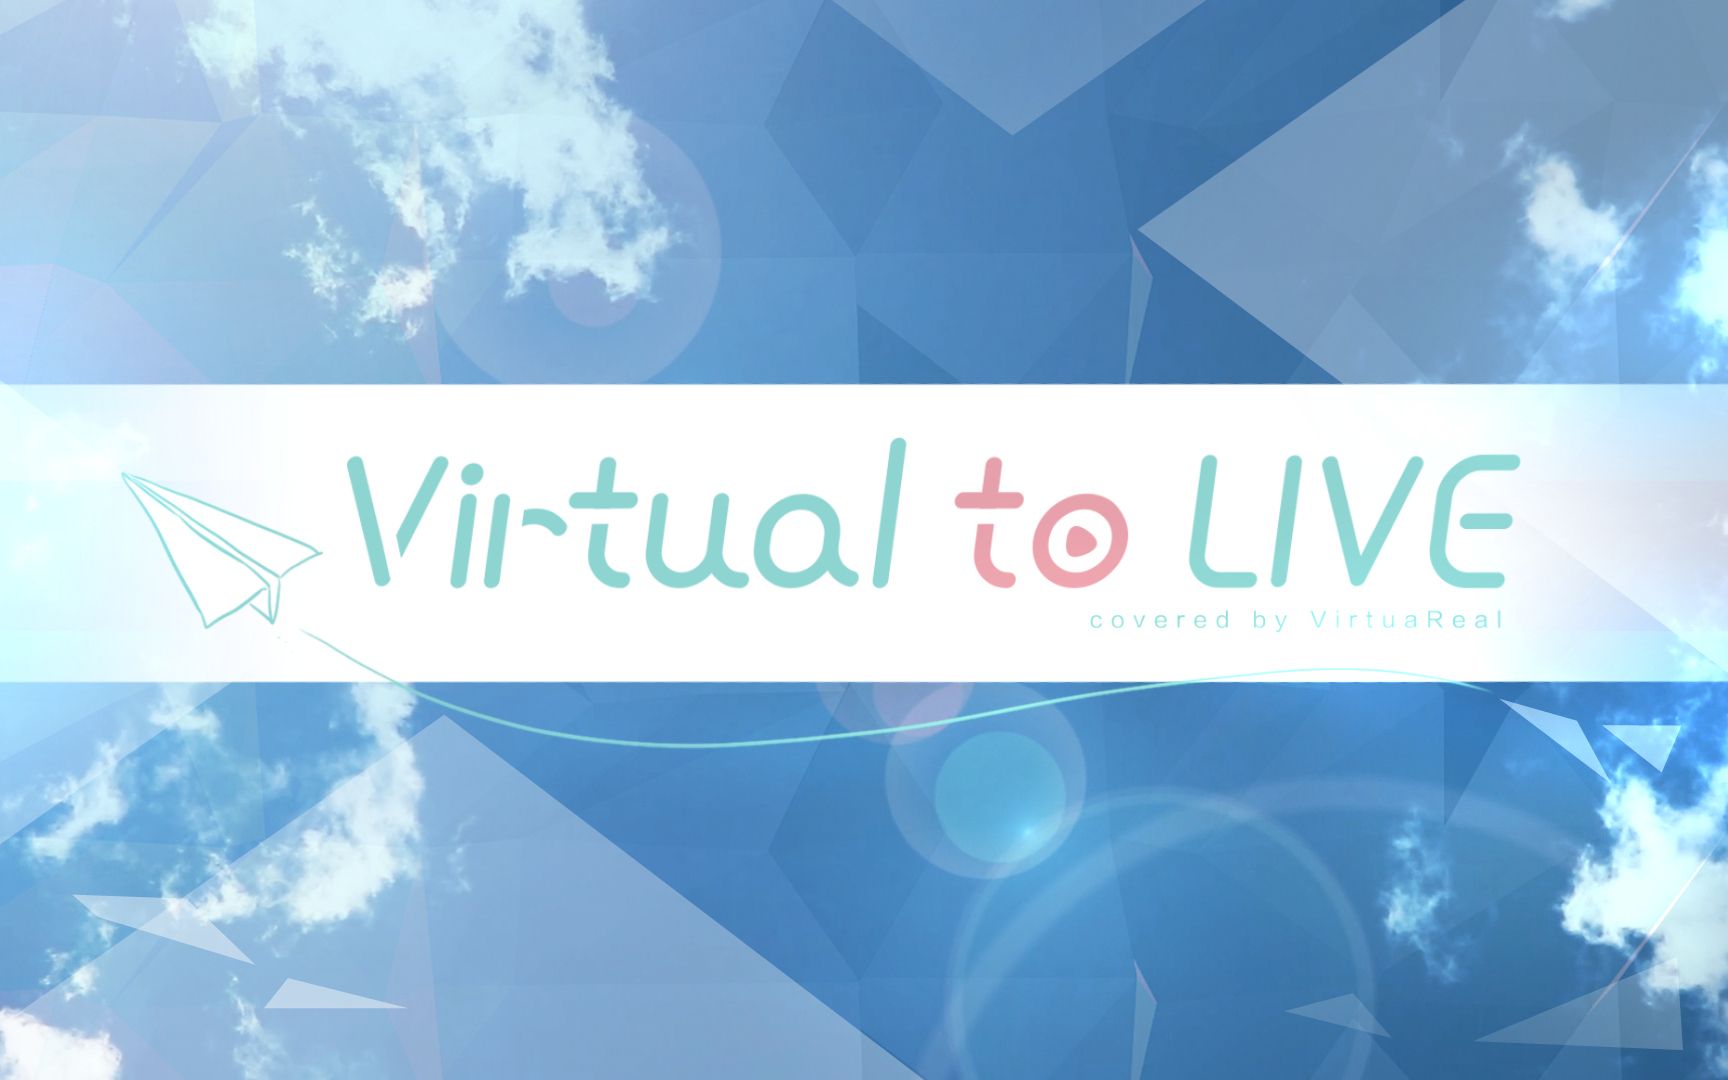 VirtuaReal - Virtual to LIVE(中文版)